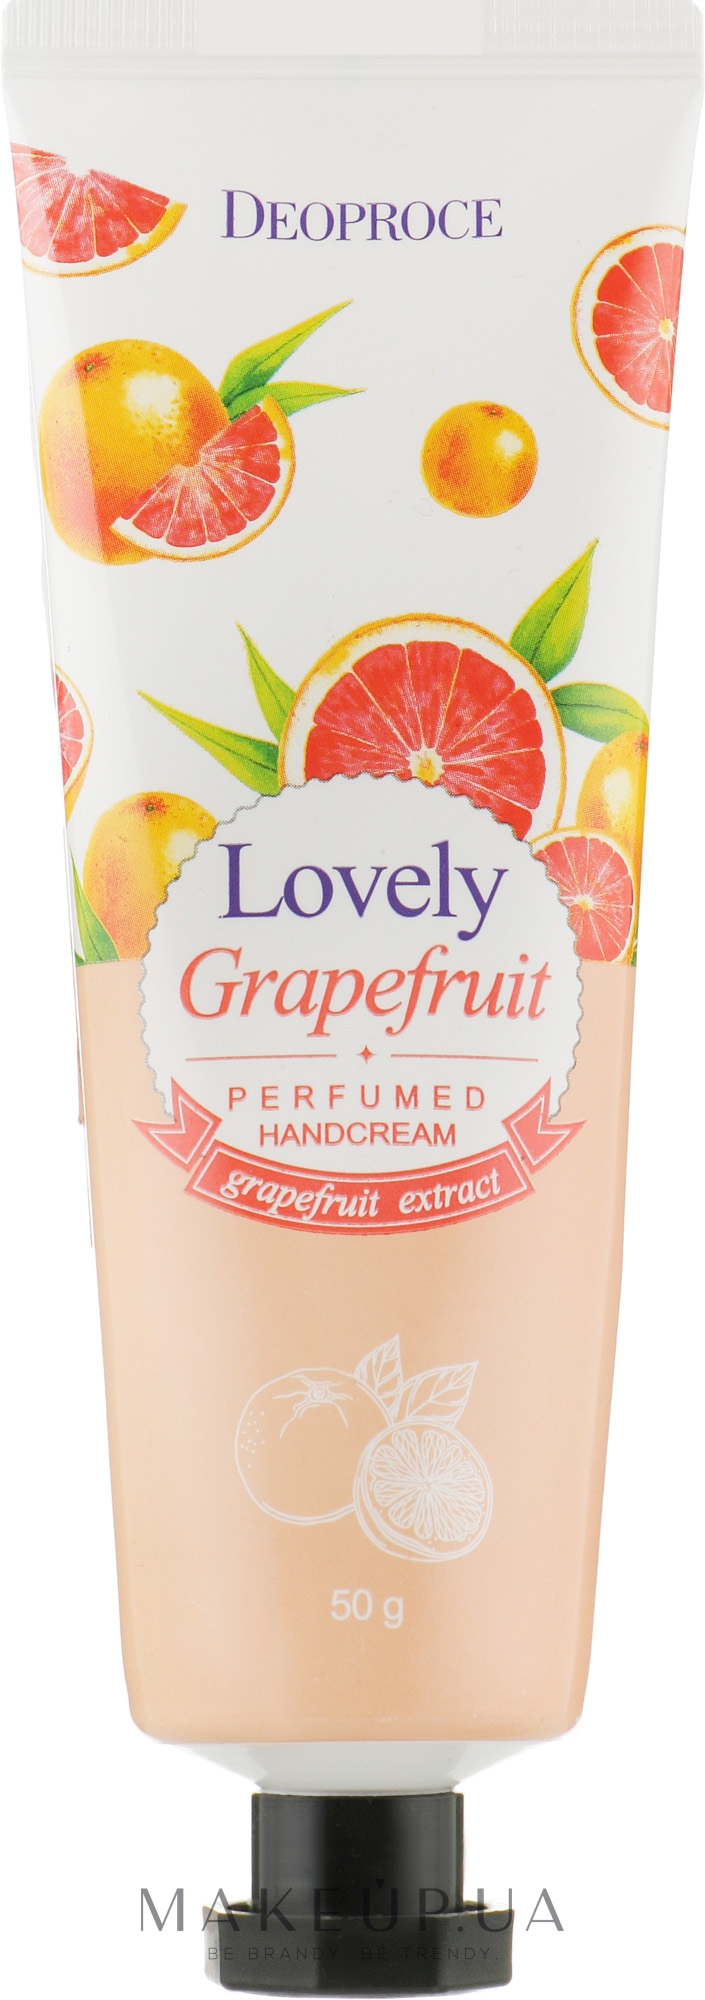 Увлажняющий крем для рук с экстрактом грейпфрута - Deoproce Lovely Grape Fruit Perfumed Hand Cream  — фото 50g